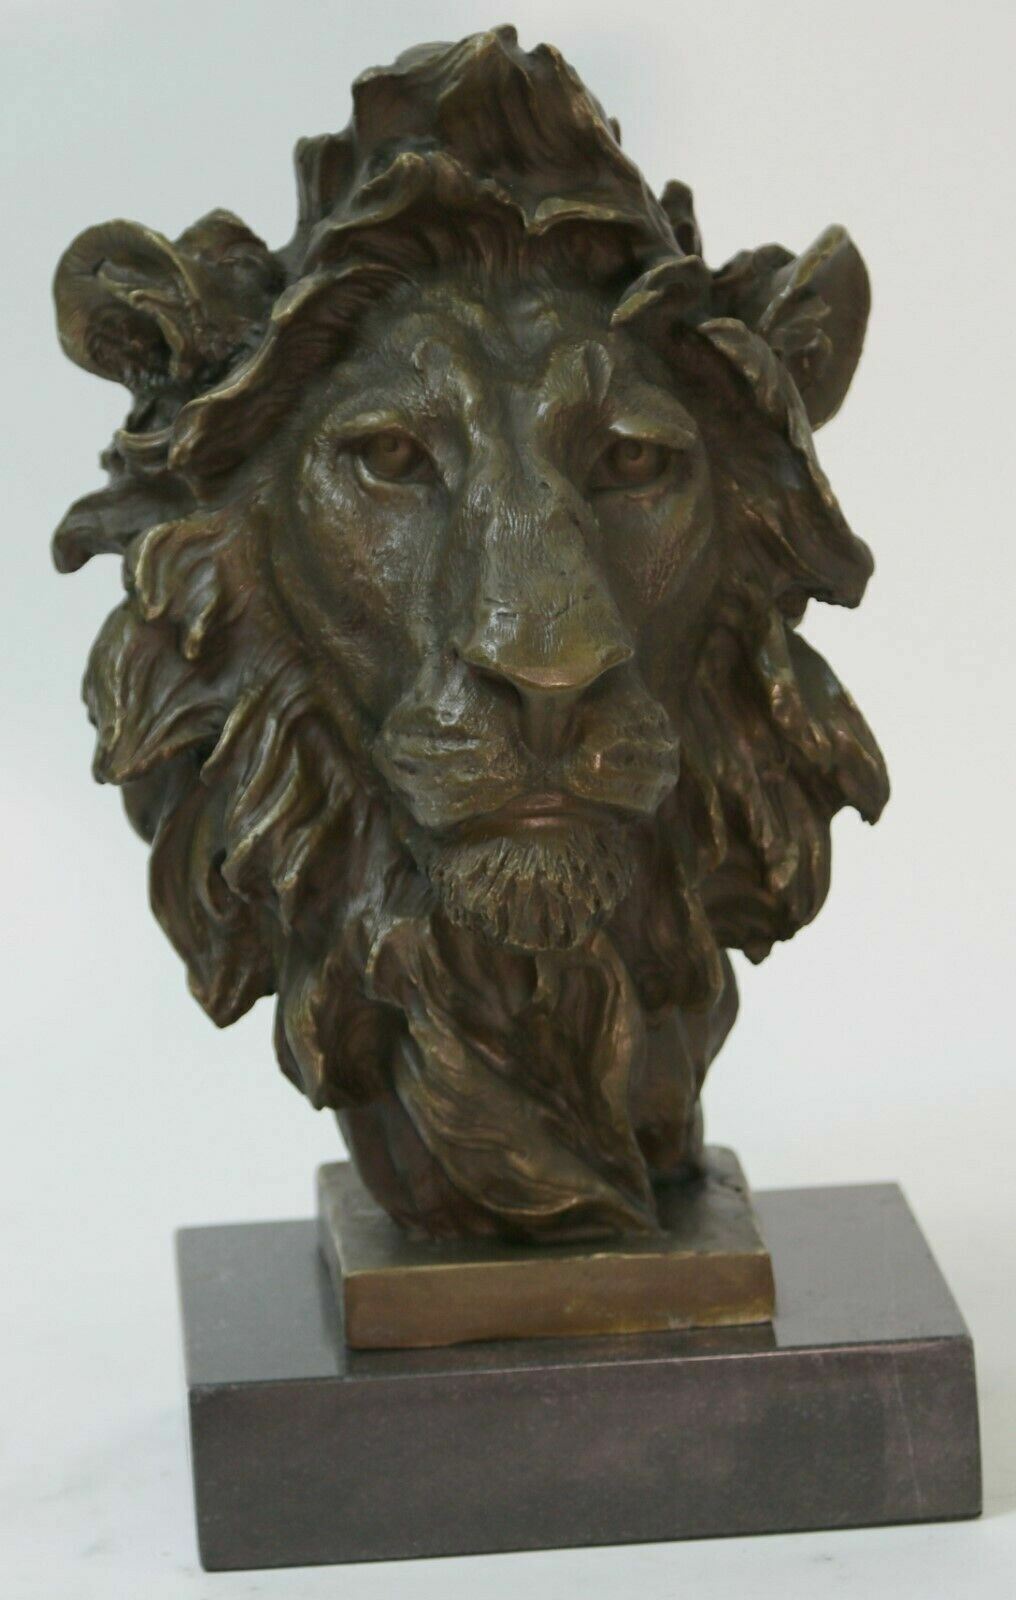 15 LBS Vintage Bronze Copper Sculpture lion Head Desktop Statue Figurine Figure